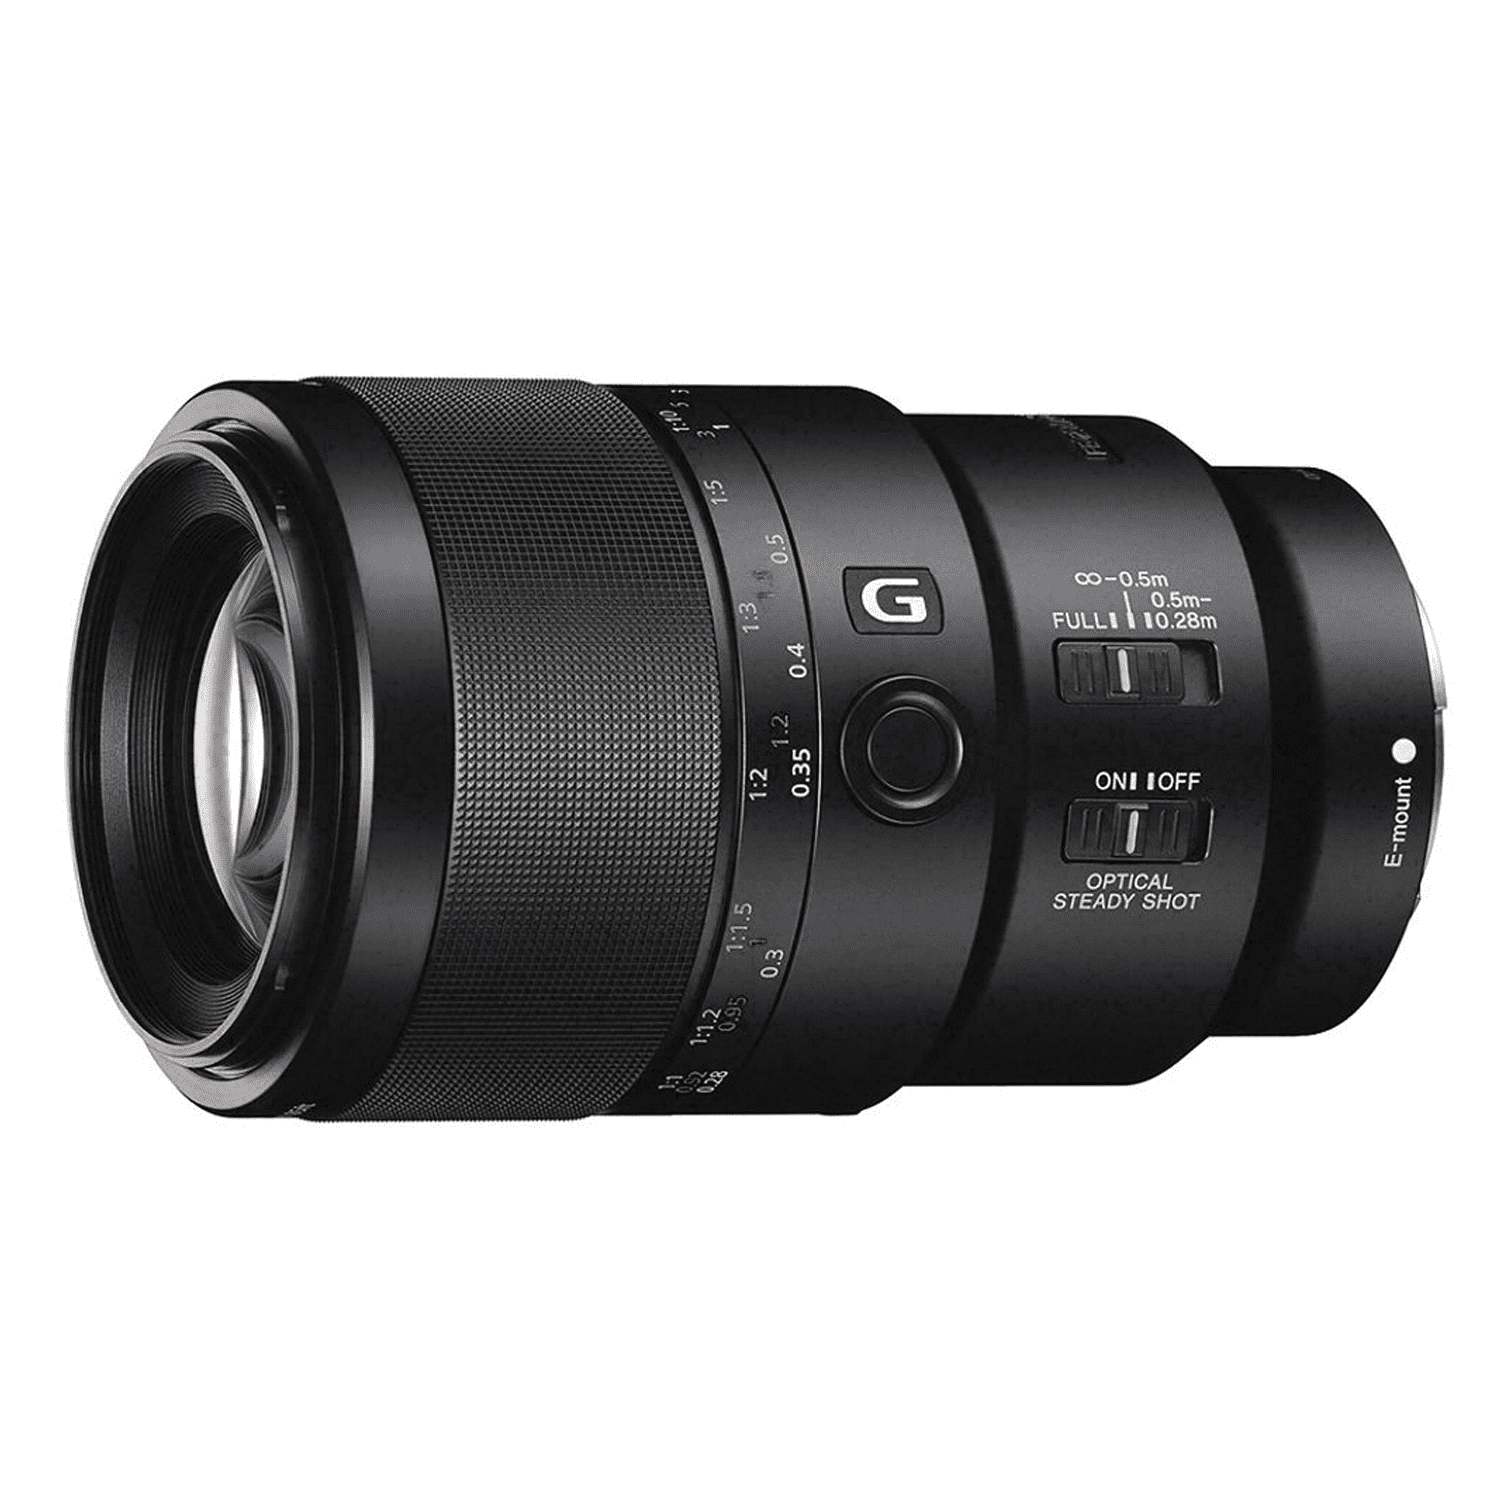 Sony FE 90mm F2.8 Macro G OSS Lens - Lapham Sales & Rentals Inc